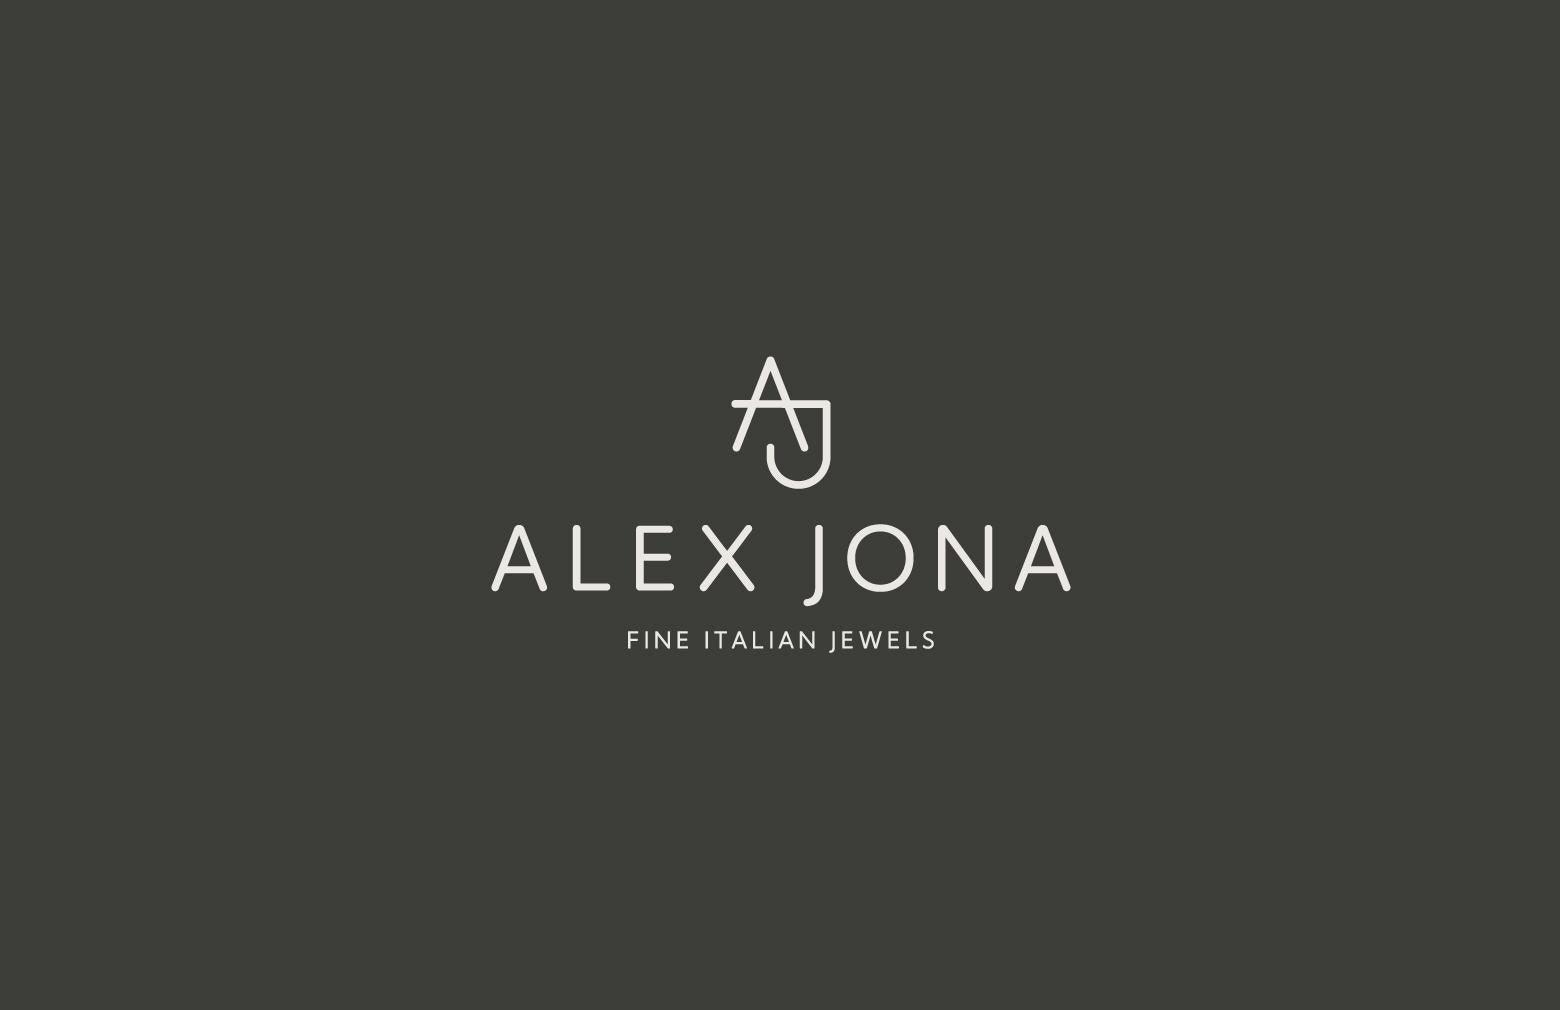 Alex Jona White Diamond Yellow Gold Square Earrings For Sale 4